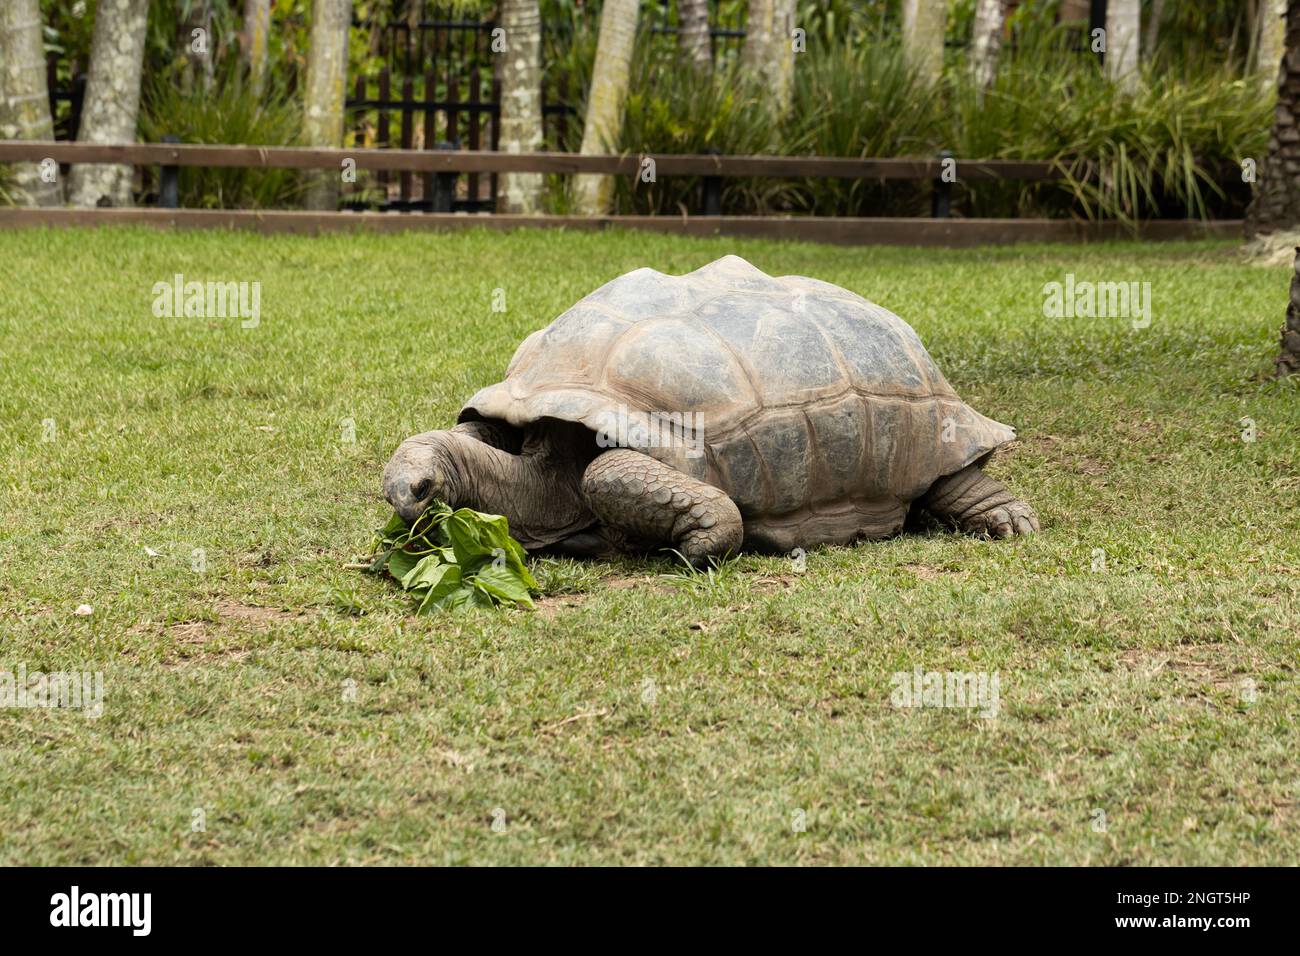 A vulnerable threatened giant aldabra tortoise (Aldabrachelys gigantea) eating hibiscus plant Stock Photo